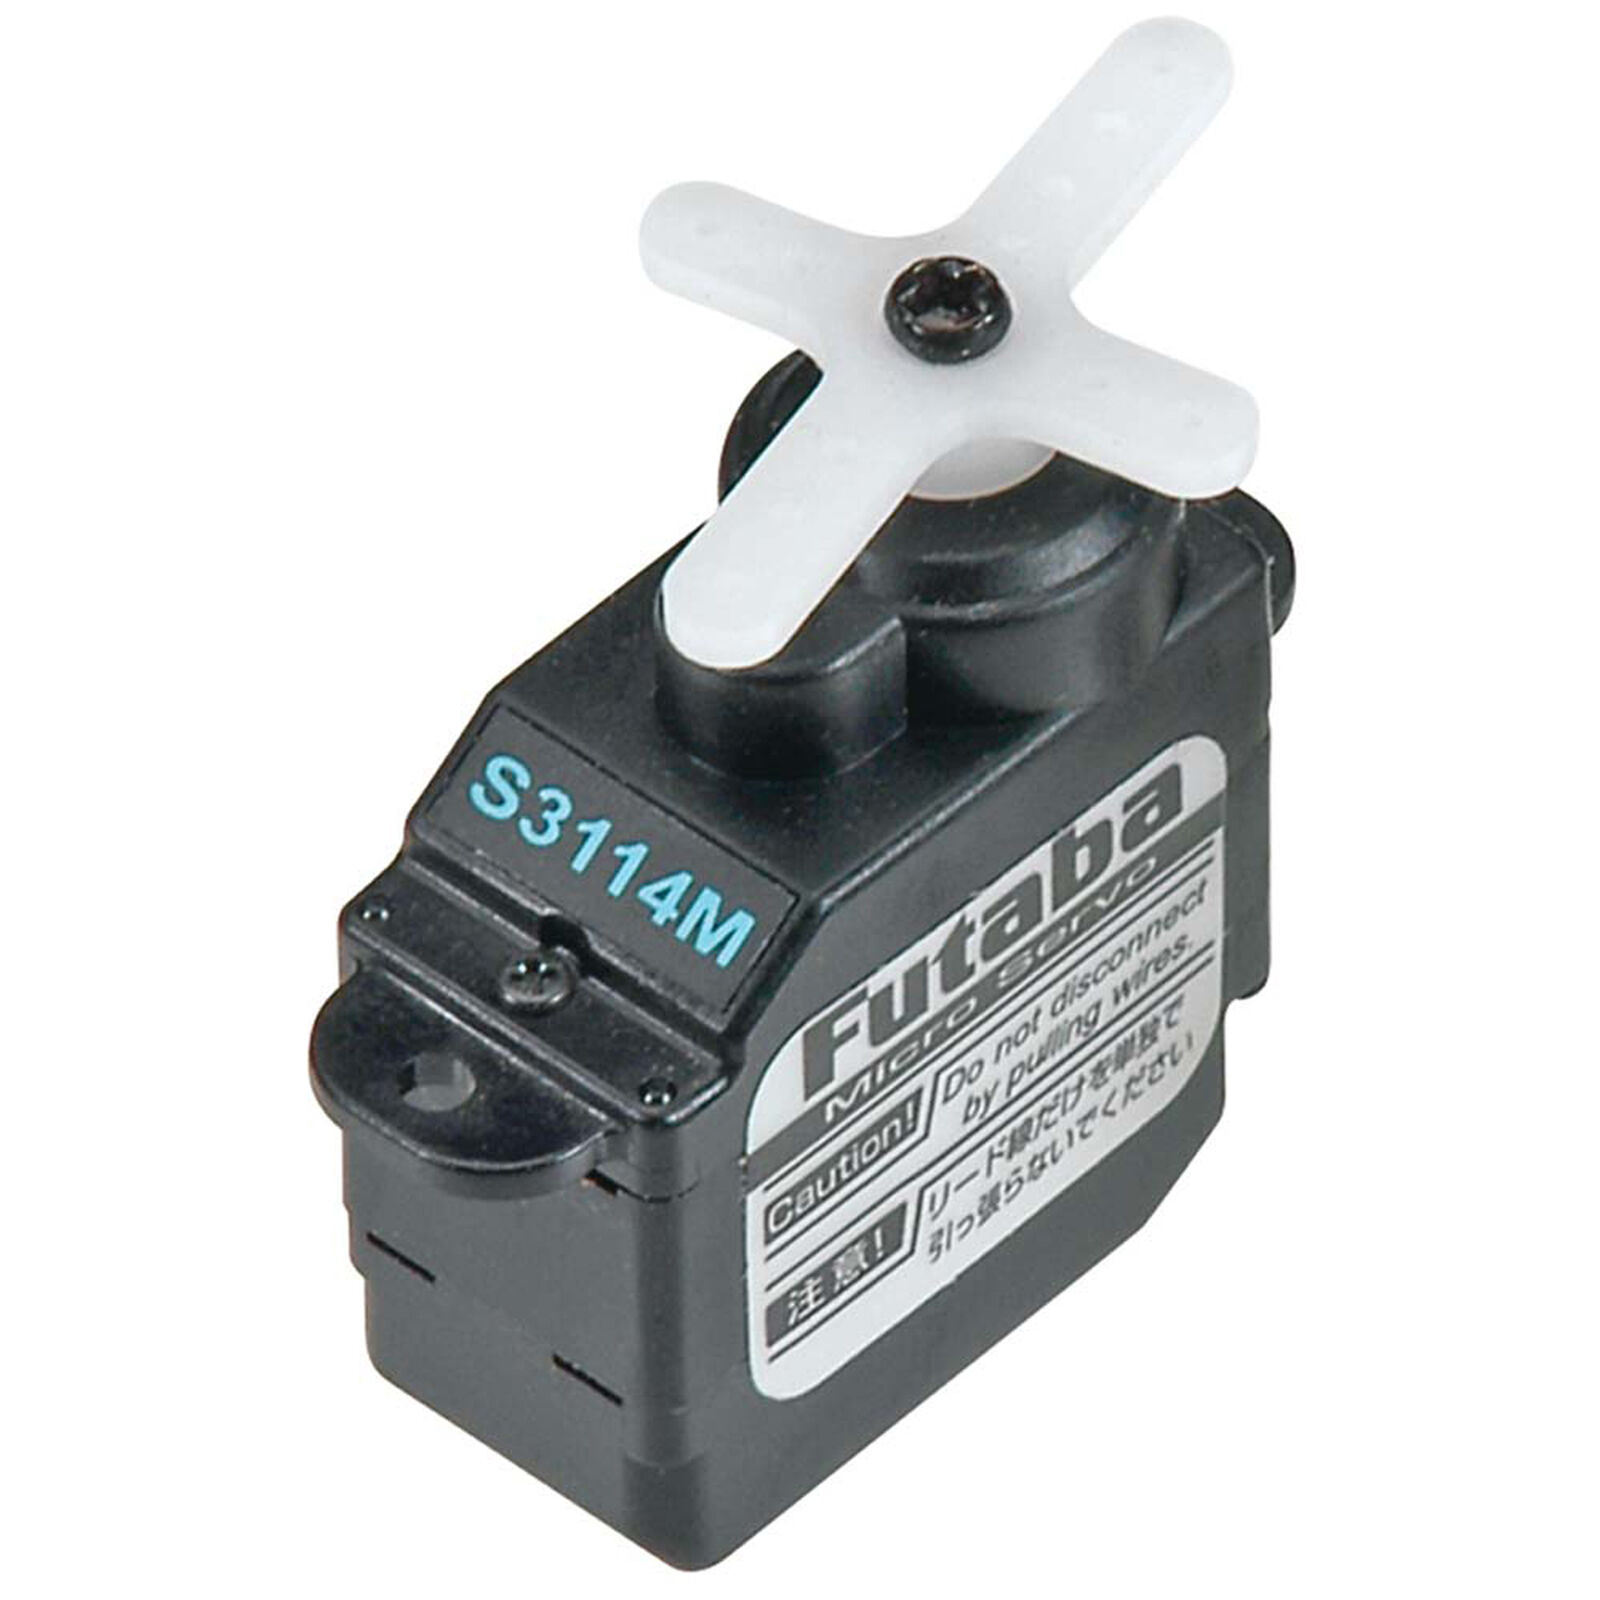 S3114M Micro High-Torque Servo with Micro Plug